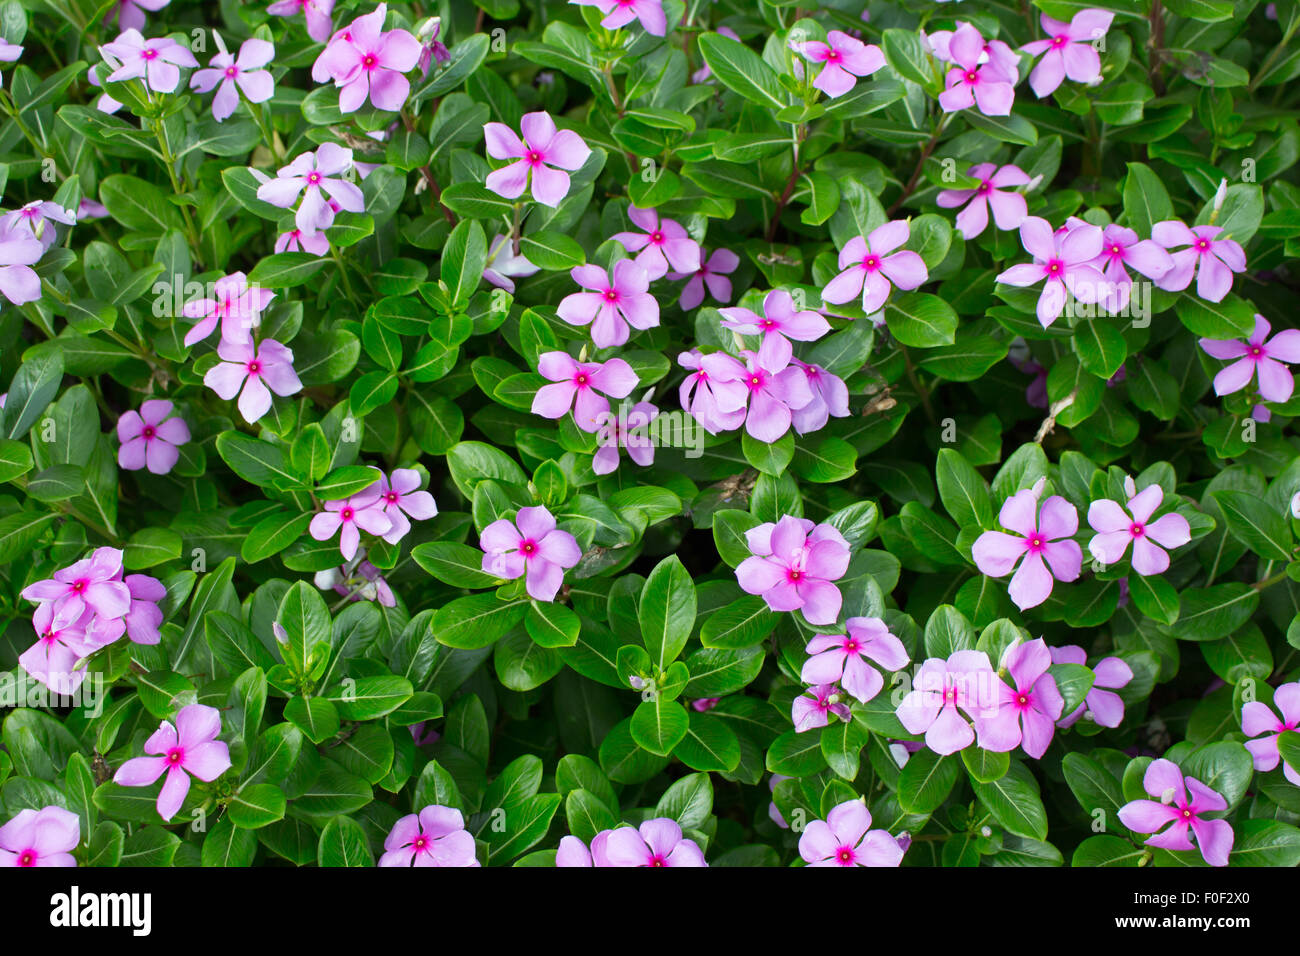 Madagascar or Periwinkle or Vinca flower, (Catharanthus roseus). Stock Photo